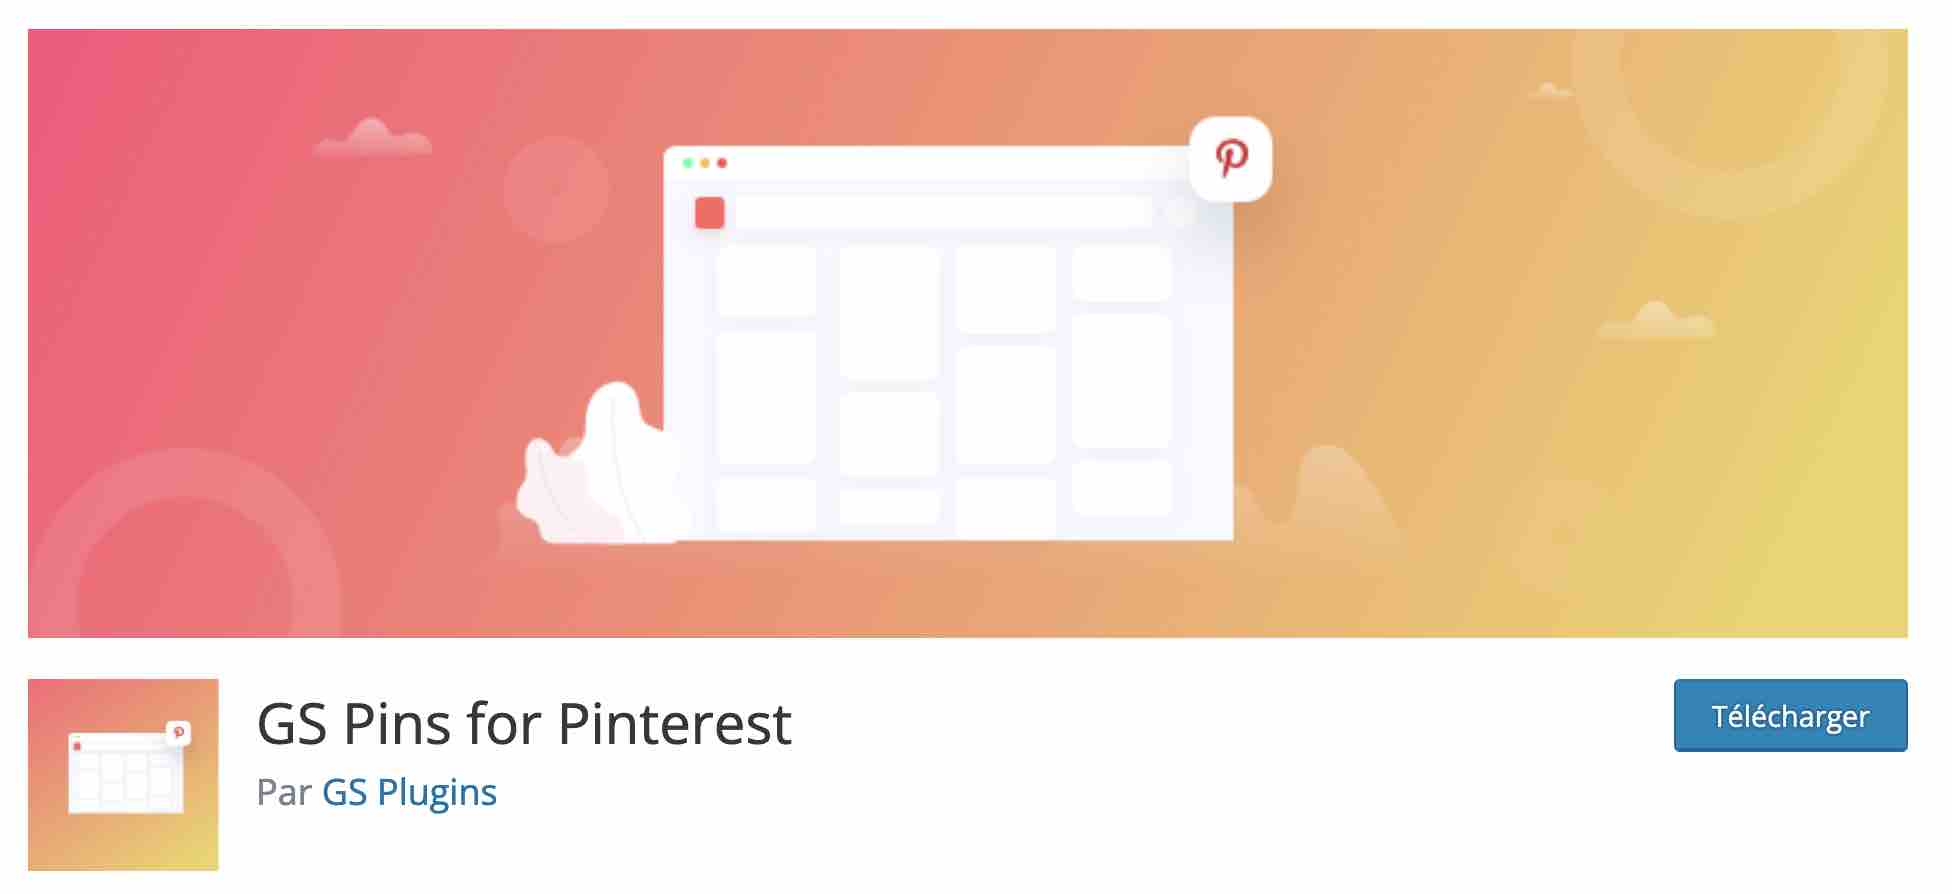 Le plugin WordPress GS Pins for Pinterest.